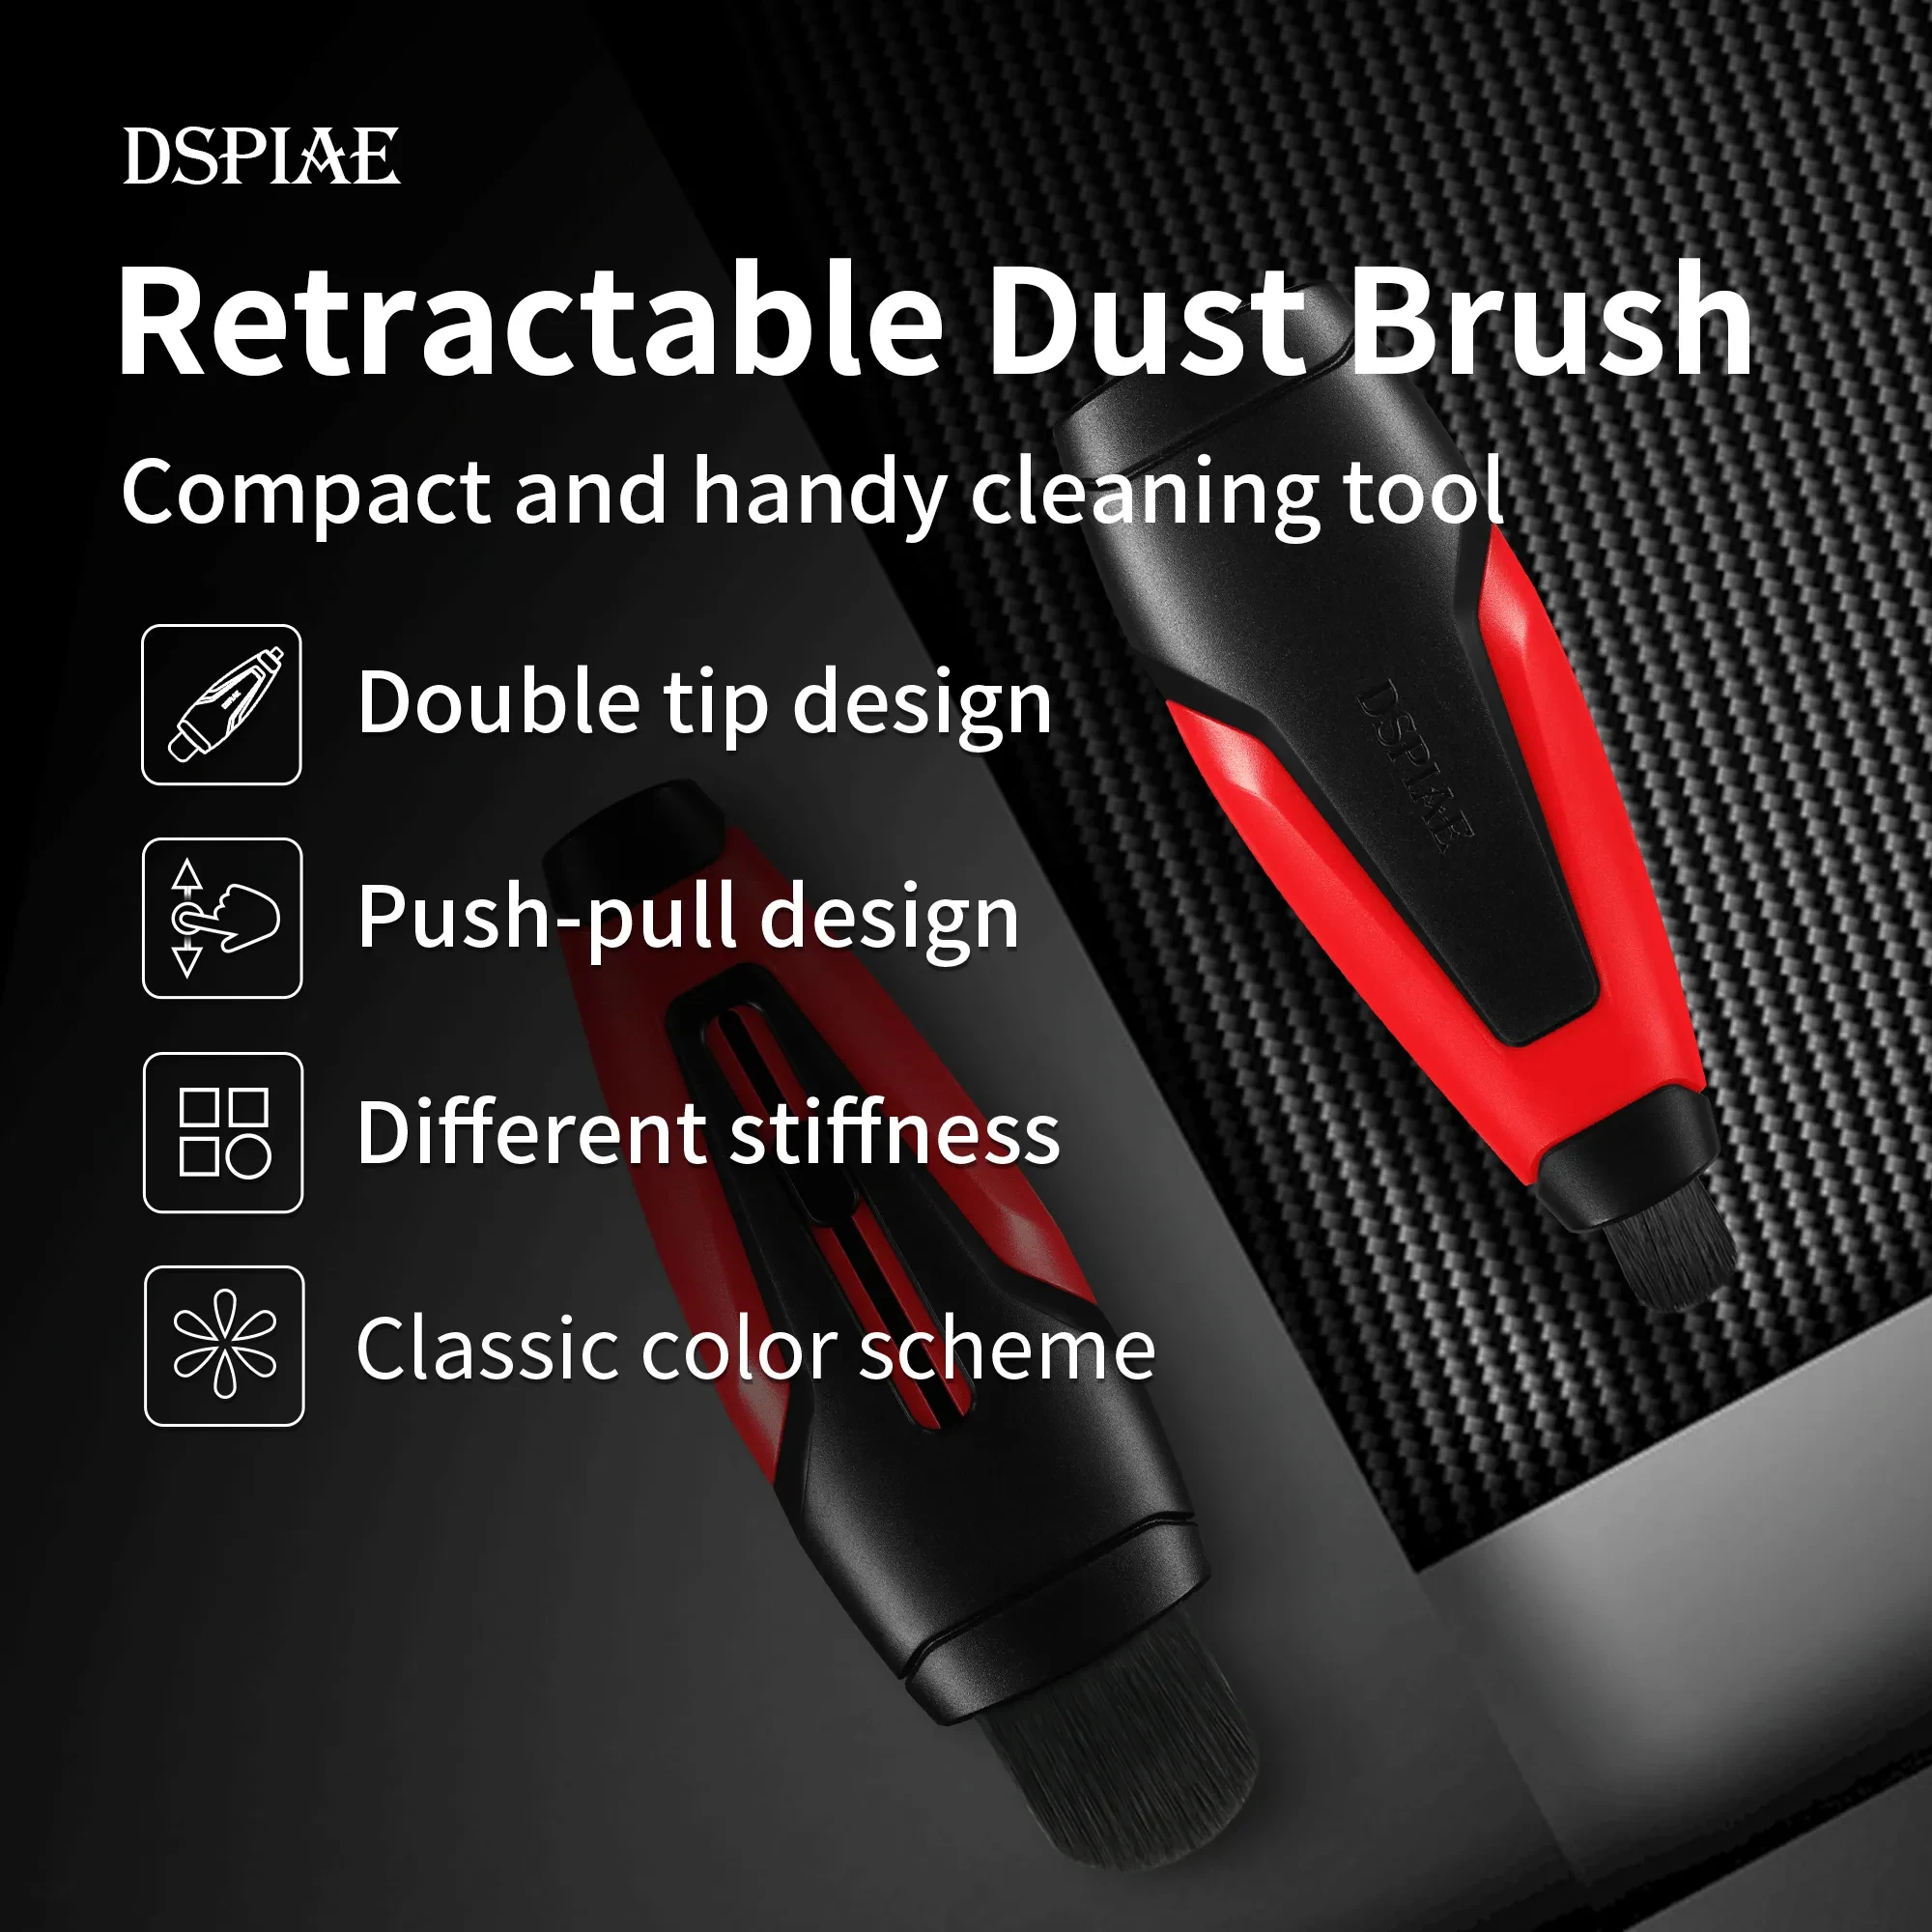 DSPIAE PT-RDB Retractable Dust Brush Double-head Design Push-pull Structure